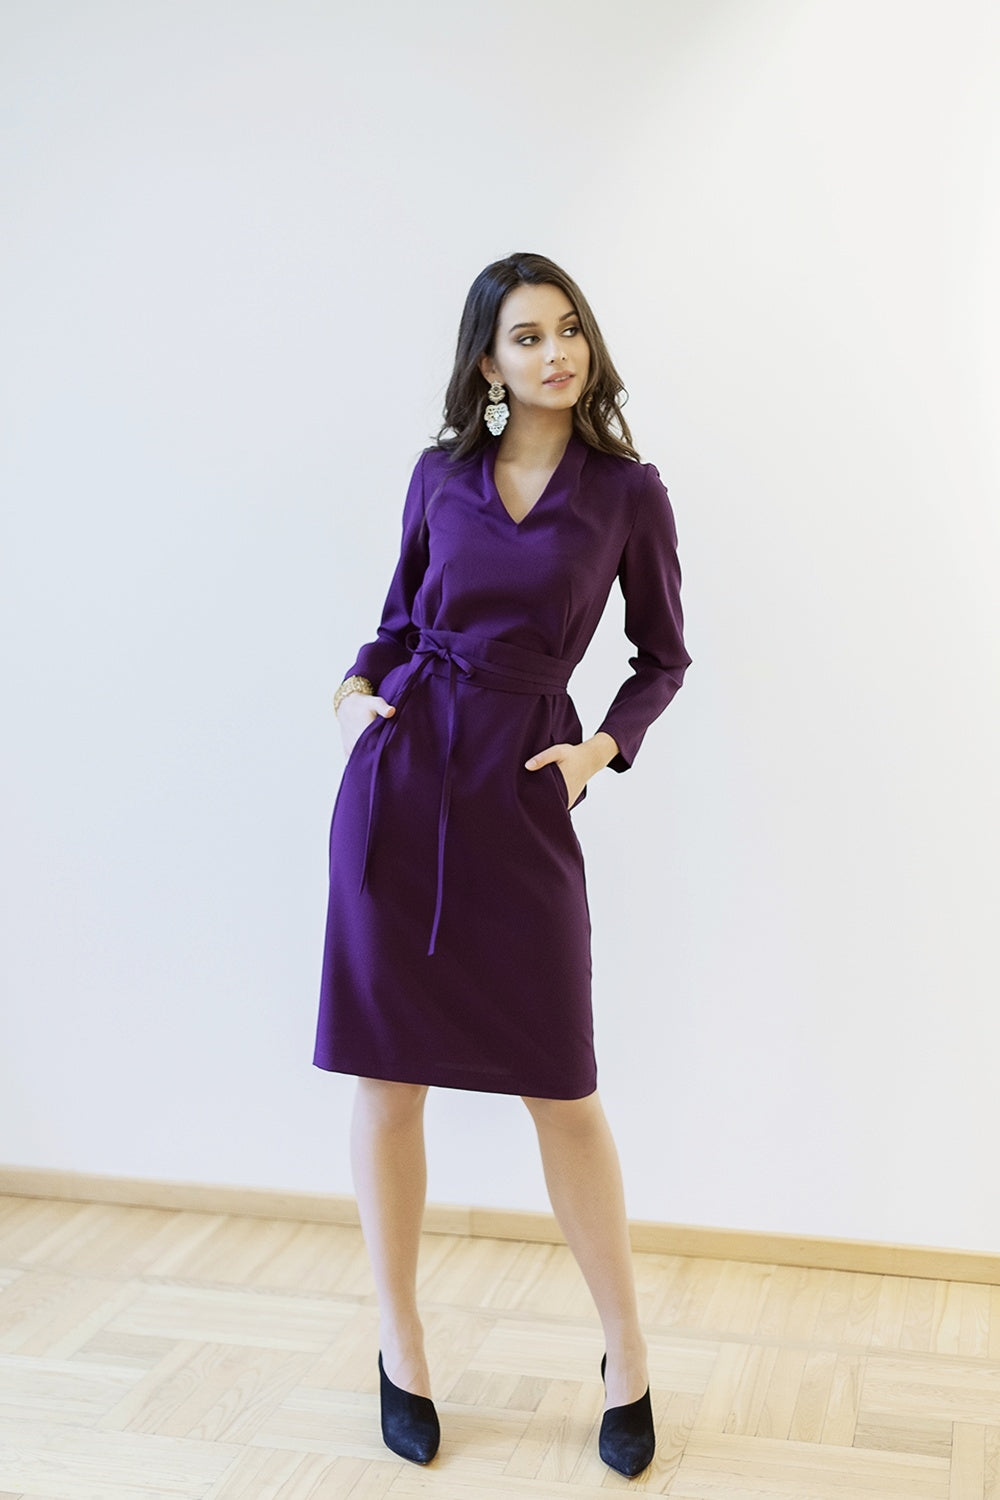 Dark purple dress with side pockets and belt